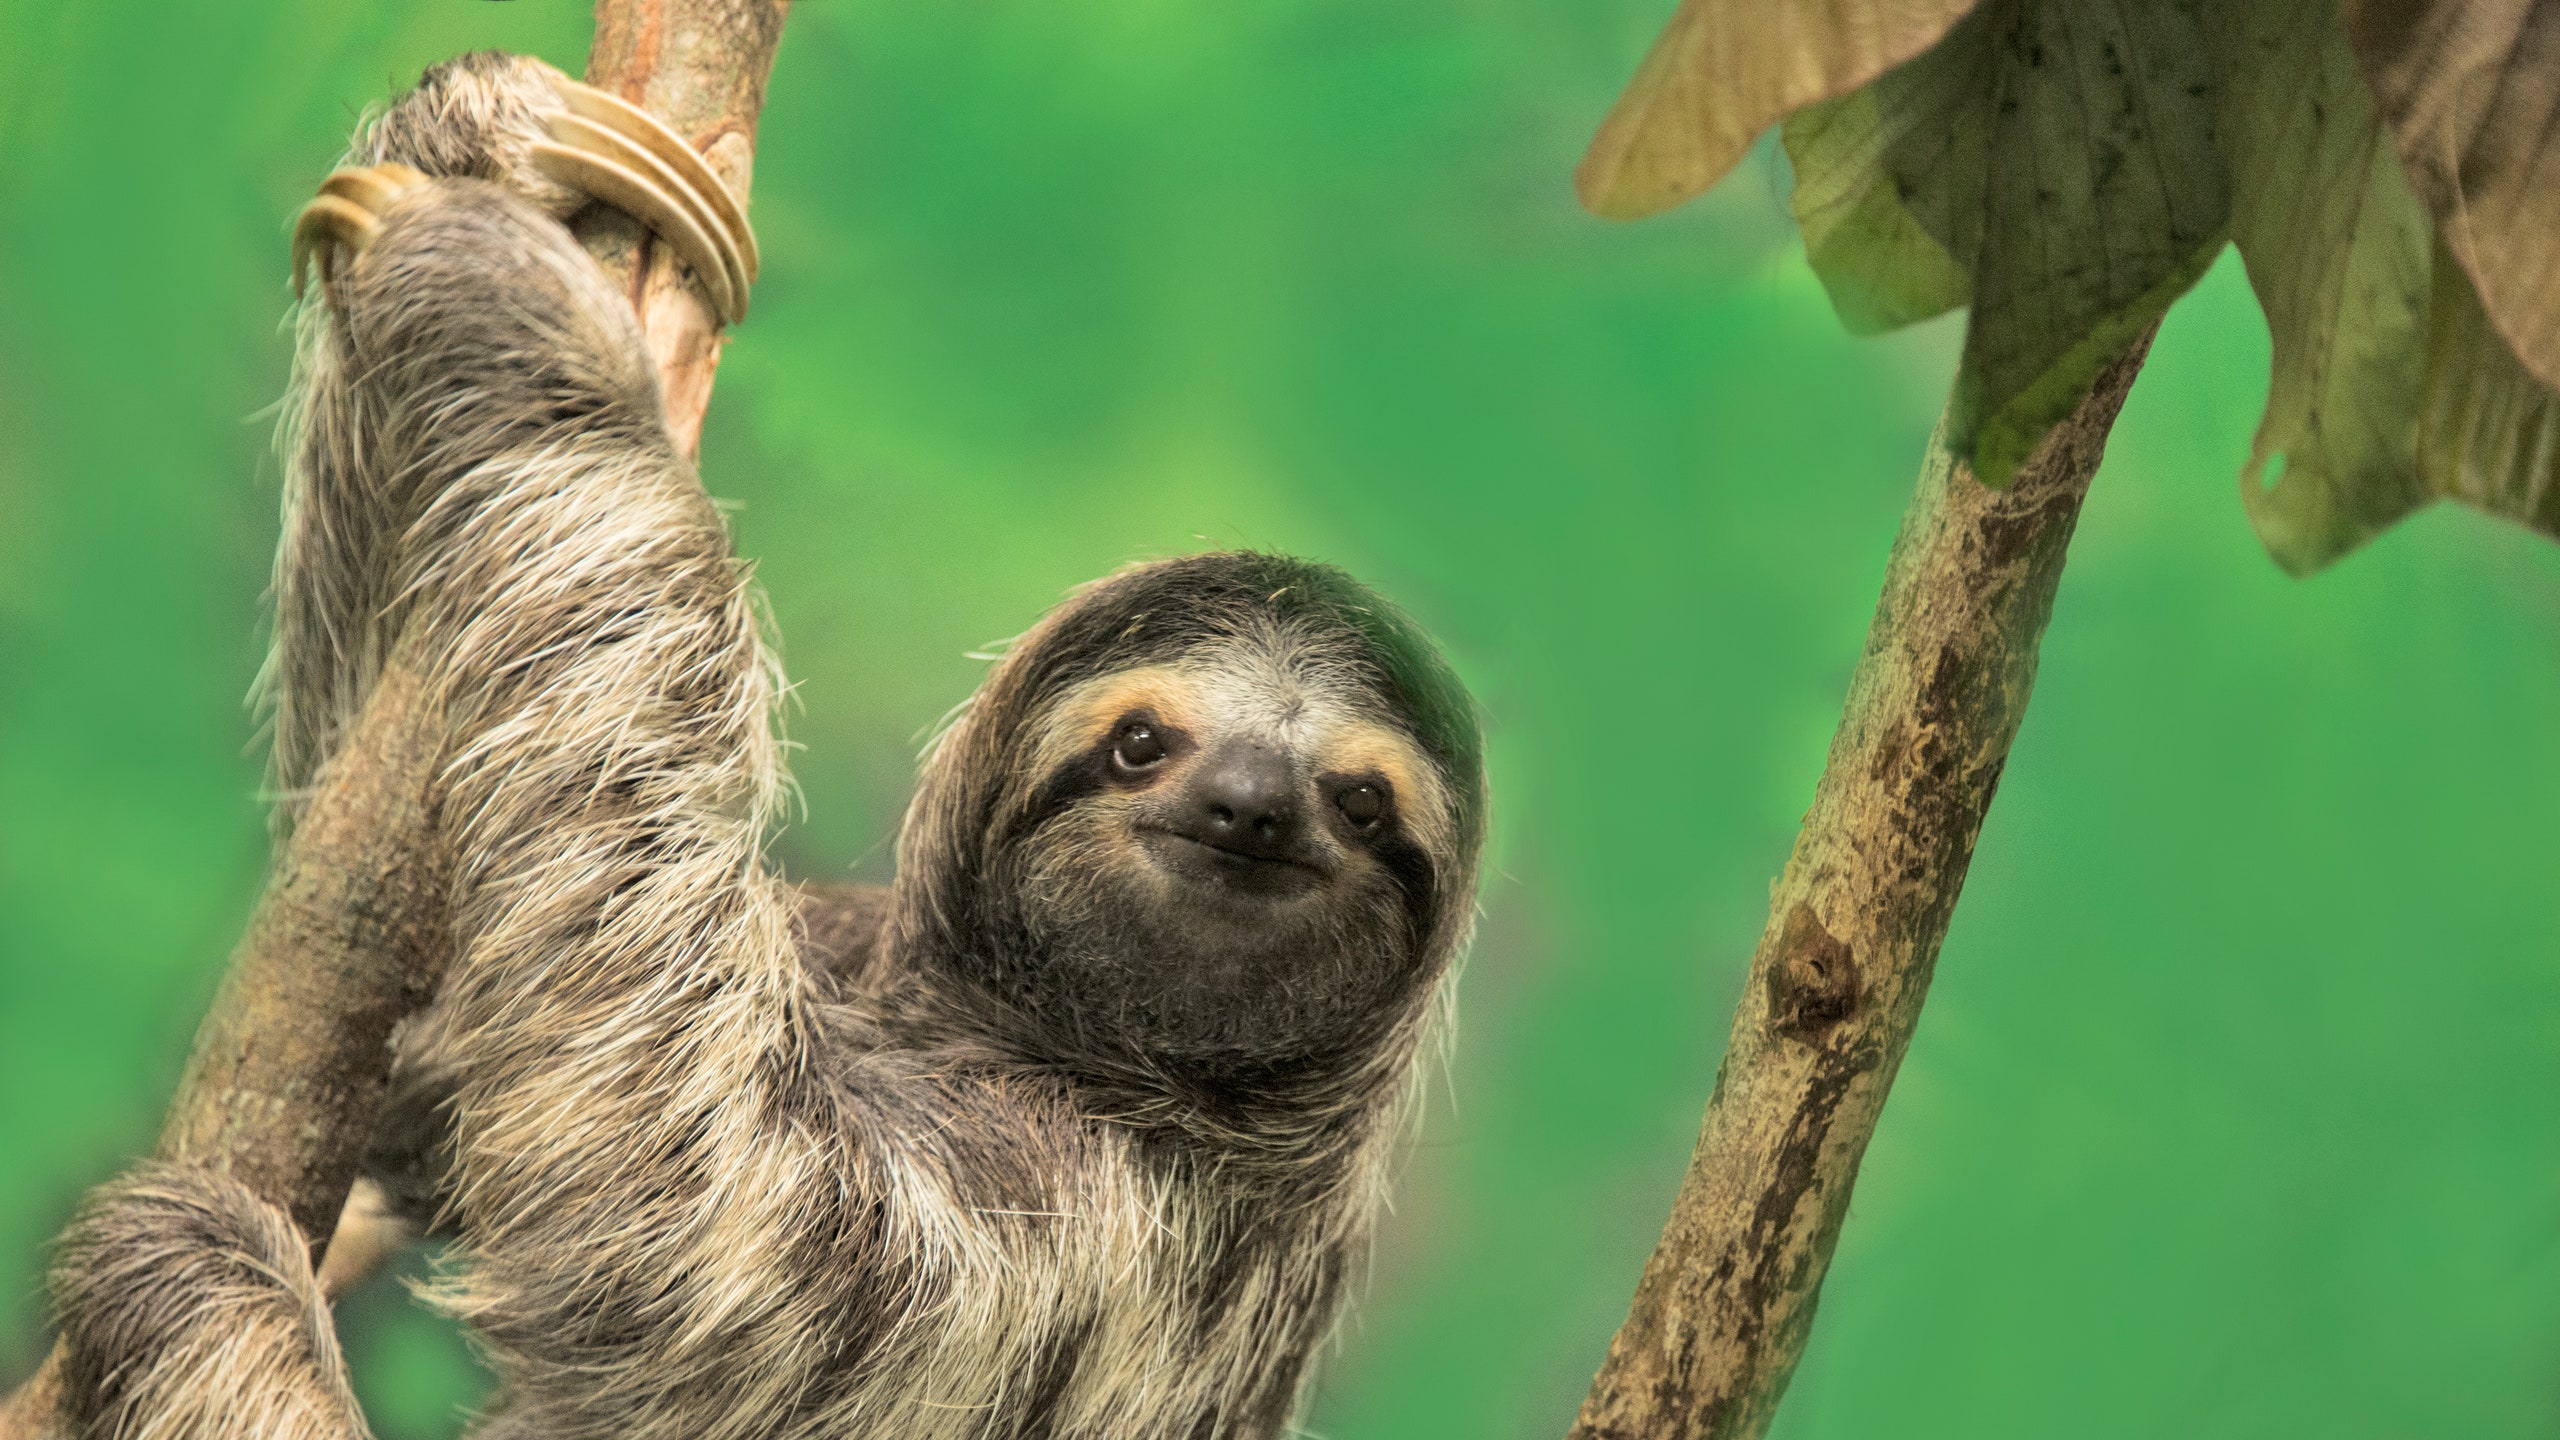 Oregon Conservation Center Offers Sloth Slumber Party. Condé Nast Traveler